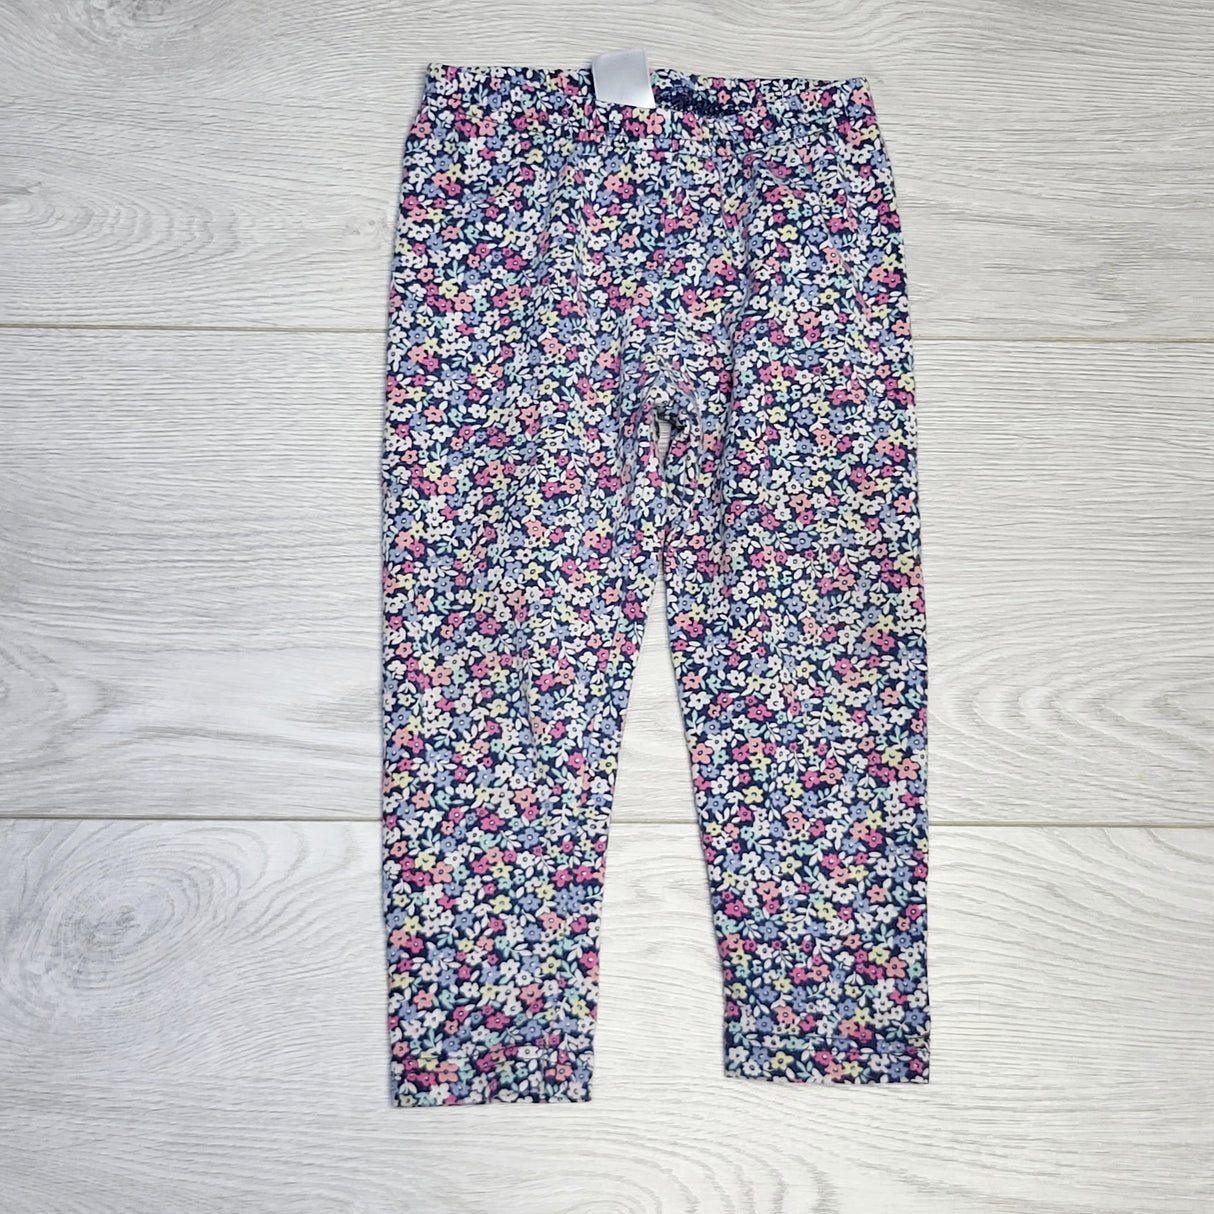 GDM1 - Carters floral print leggings, size 18 months